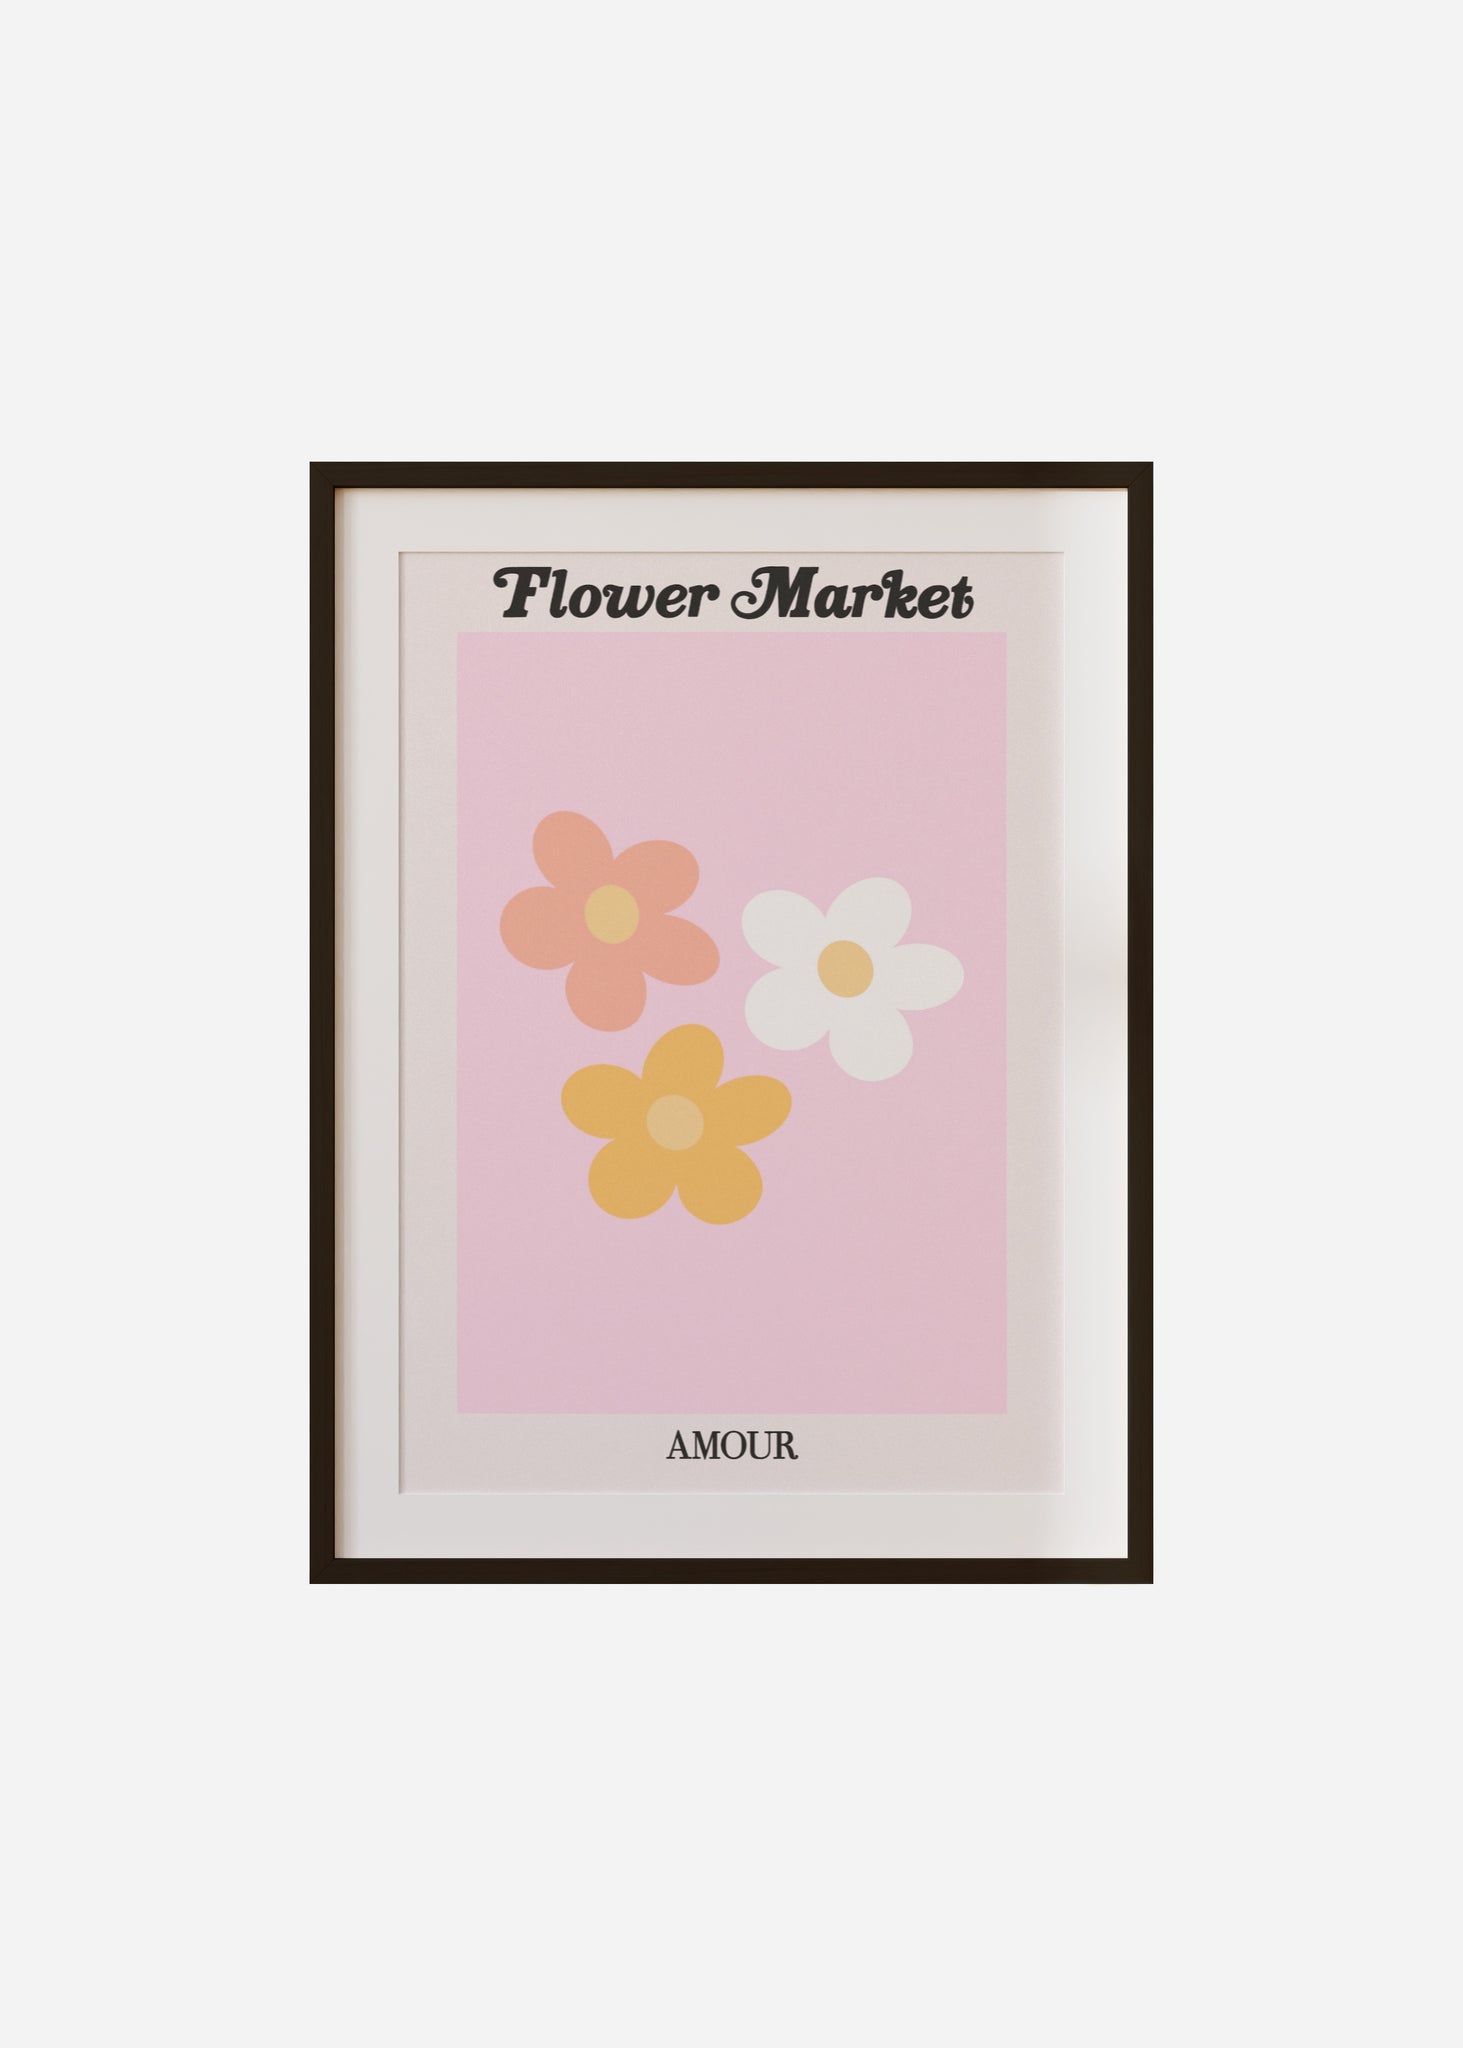 flower market / amour Framed & Mounted Print